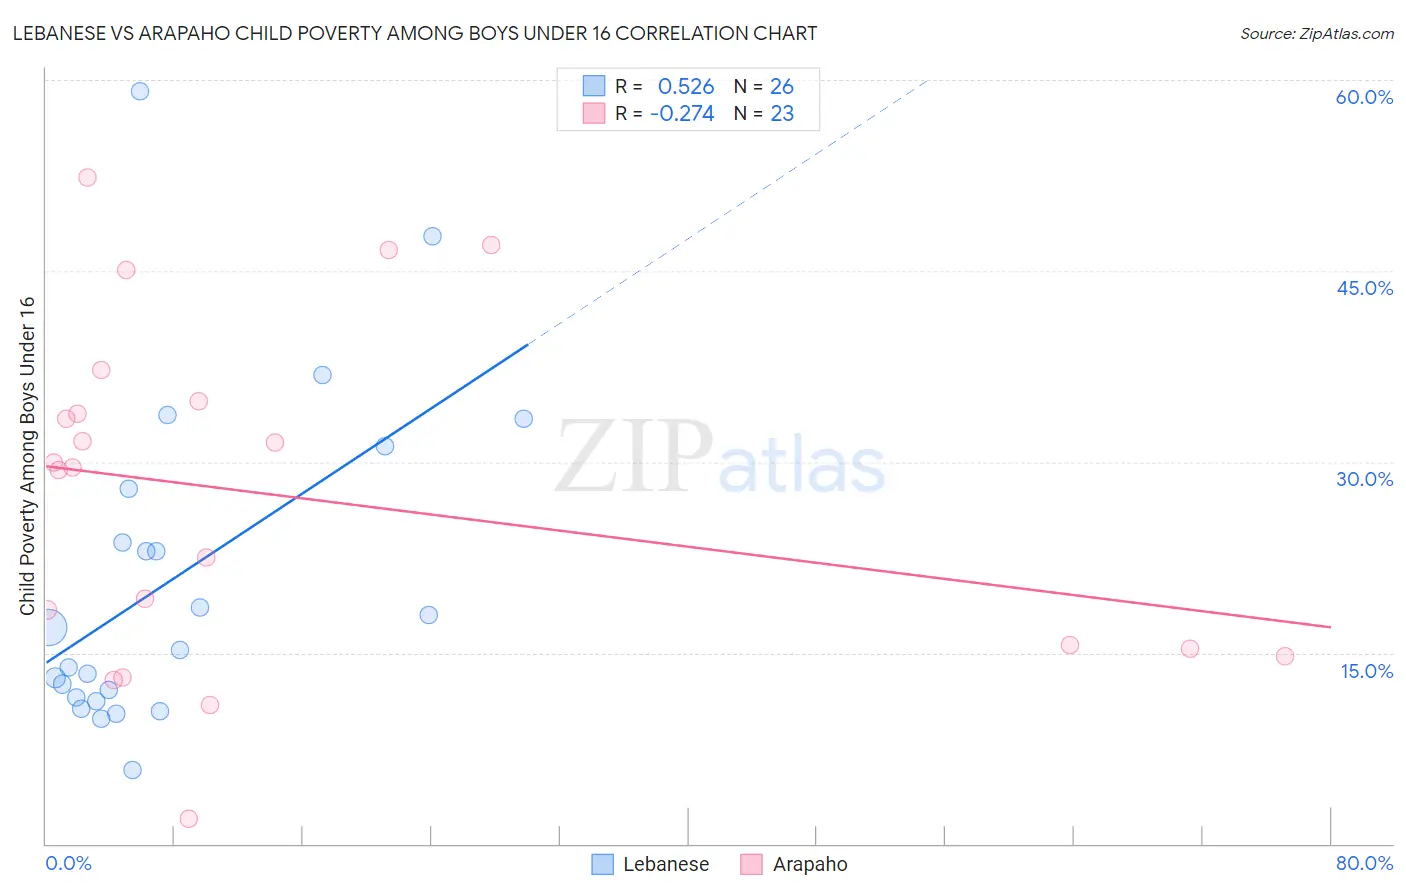 Lebanese vs Arapaho Child Poverty Among Boys Under 16